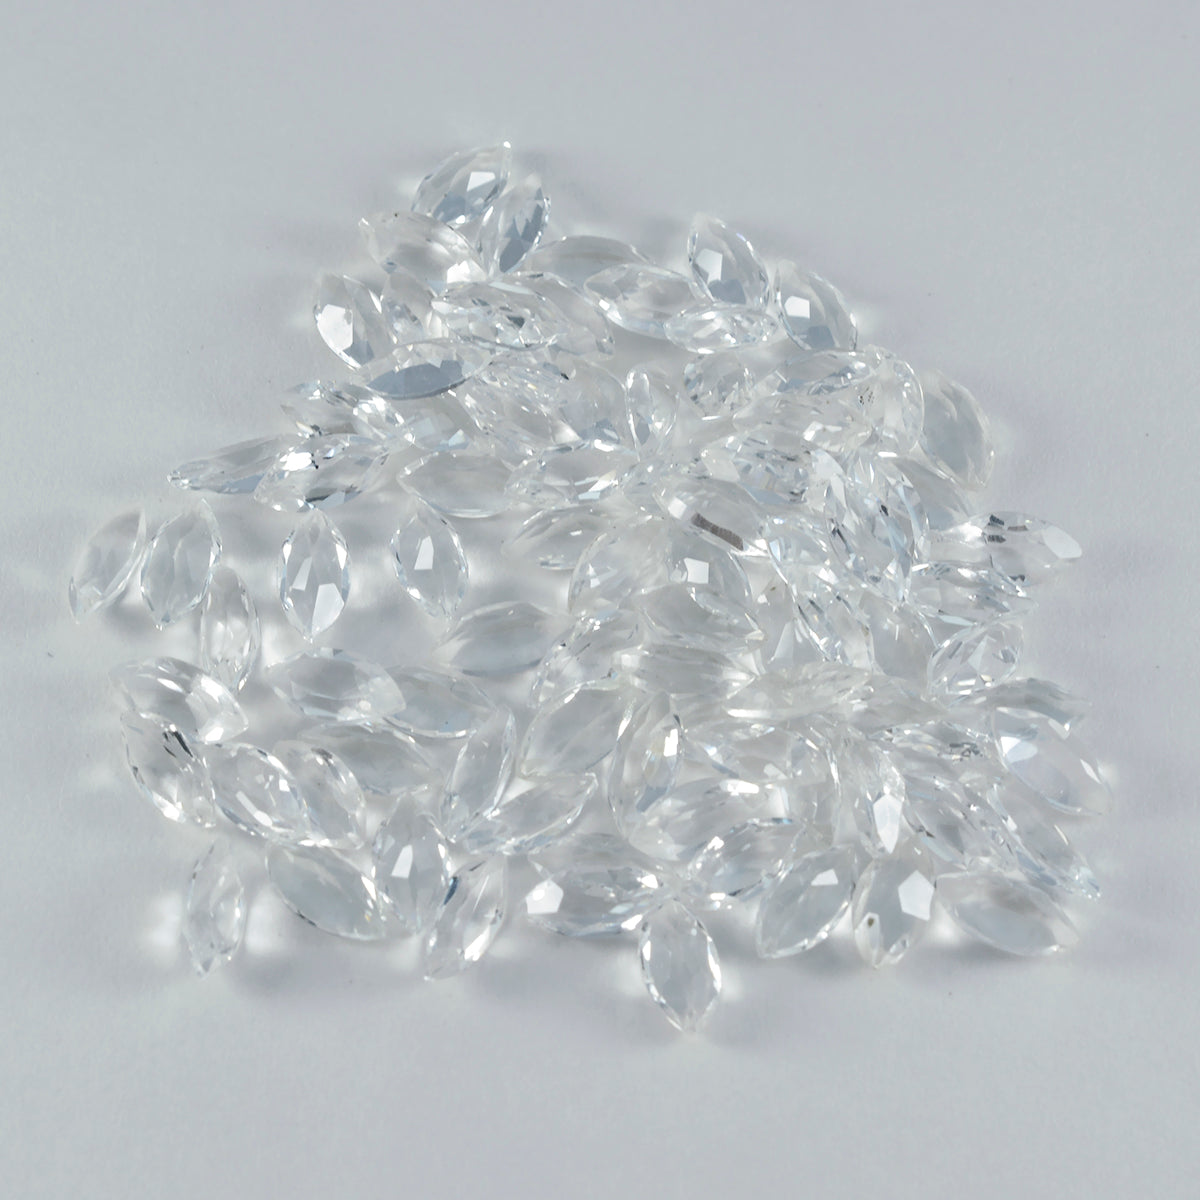 riyogems 1шт белый кристалл кварца ограненный 3х6 мм форма маркиза качественный сыпучий камень